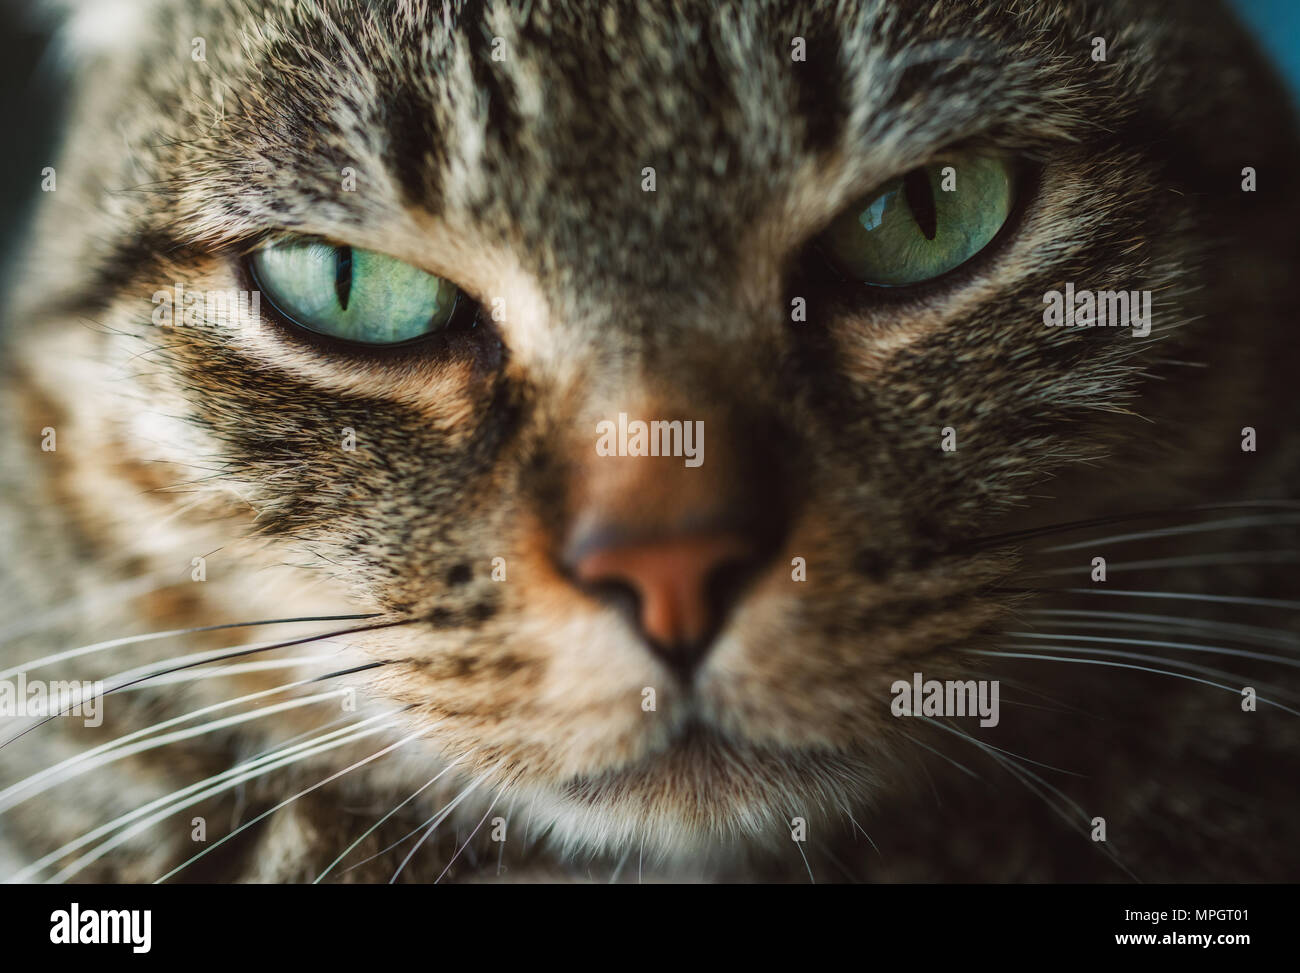 Tabby cat portrait, close up shot Stock Photo